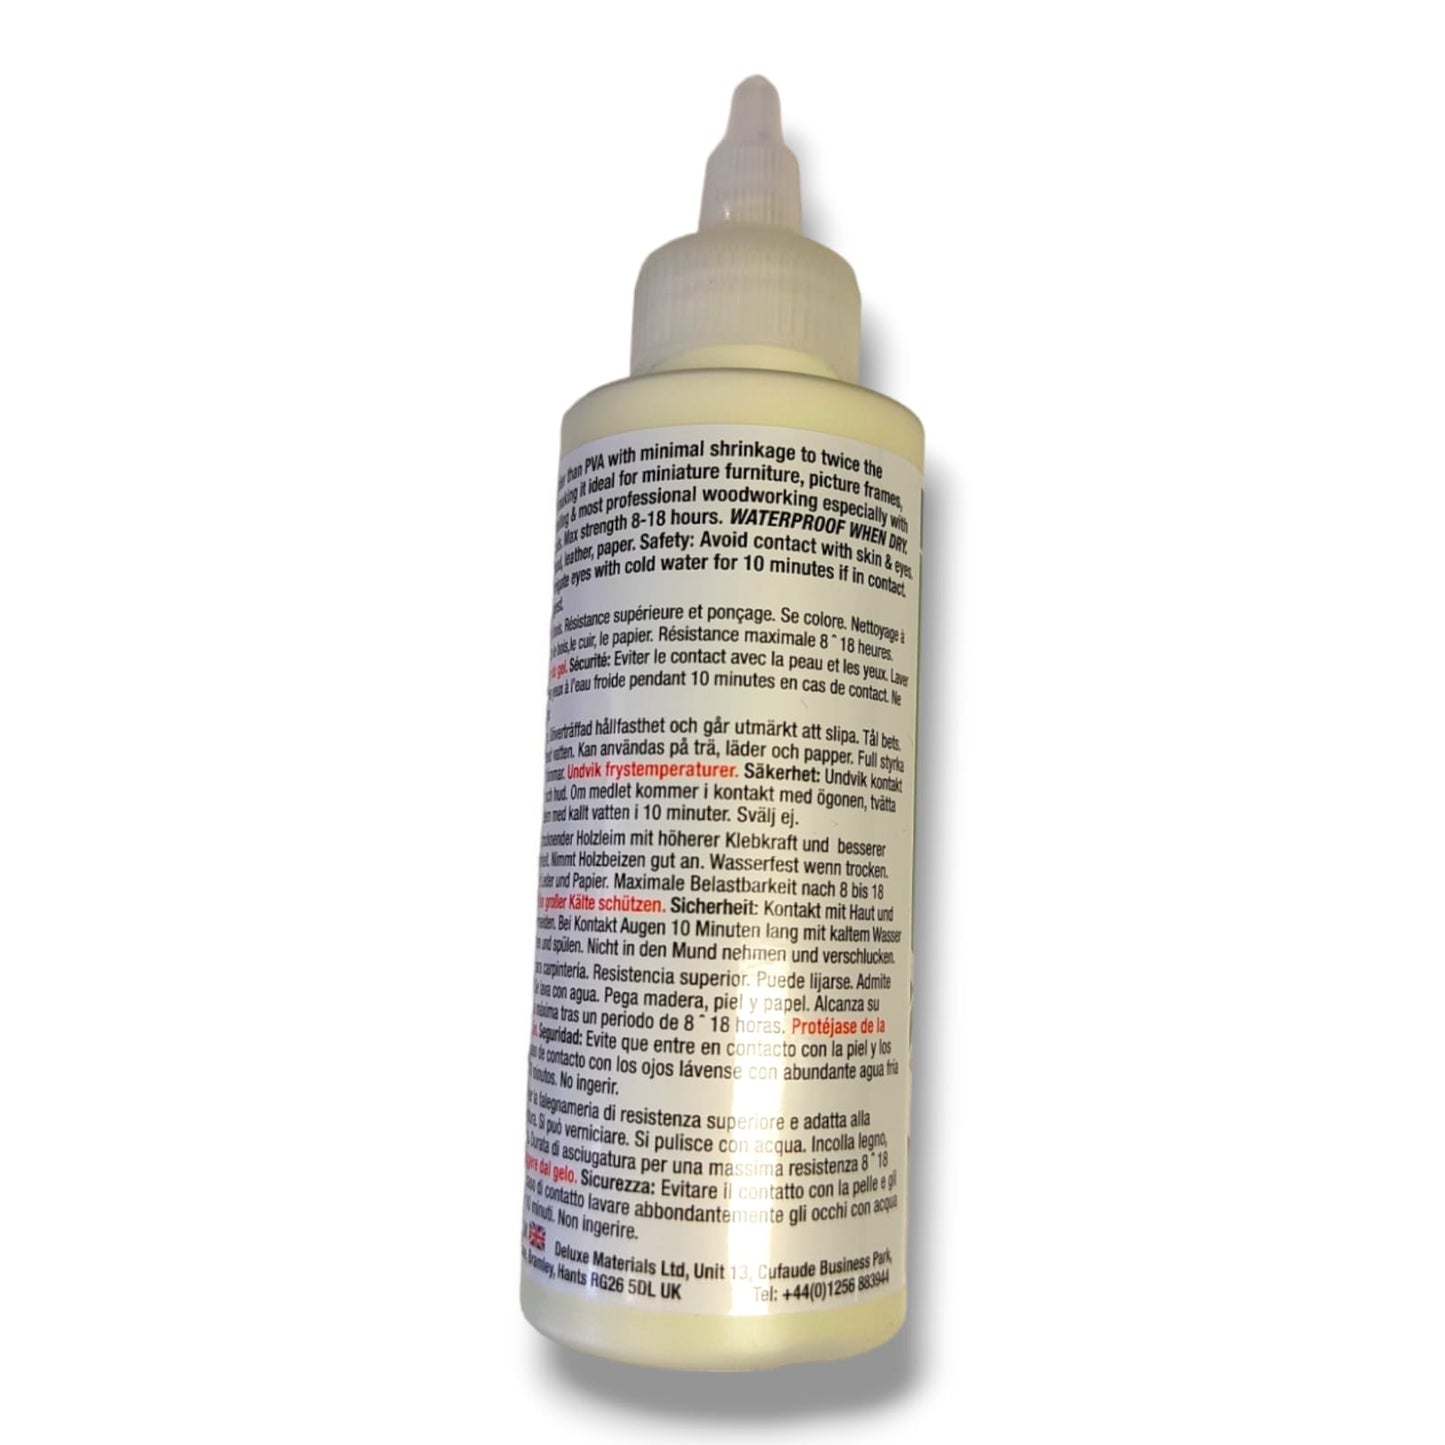 Aliphatic Resin Glue - Deluxe Materials 240ml